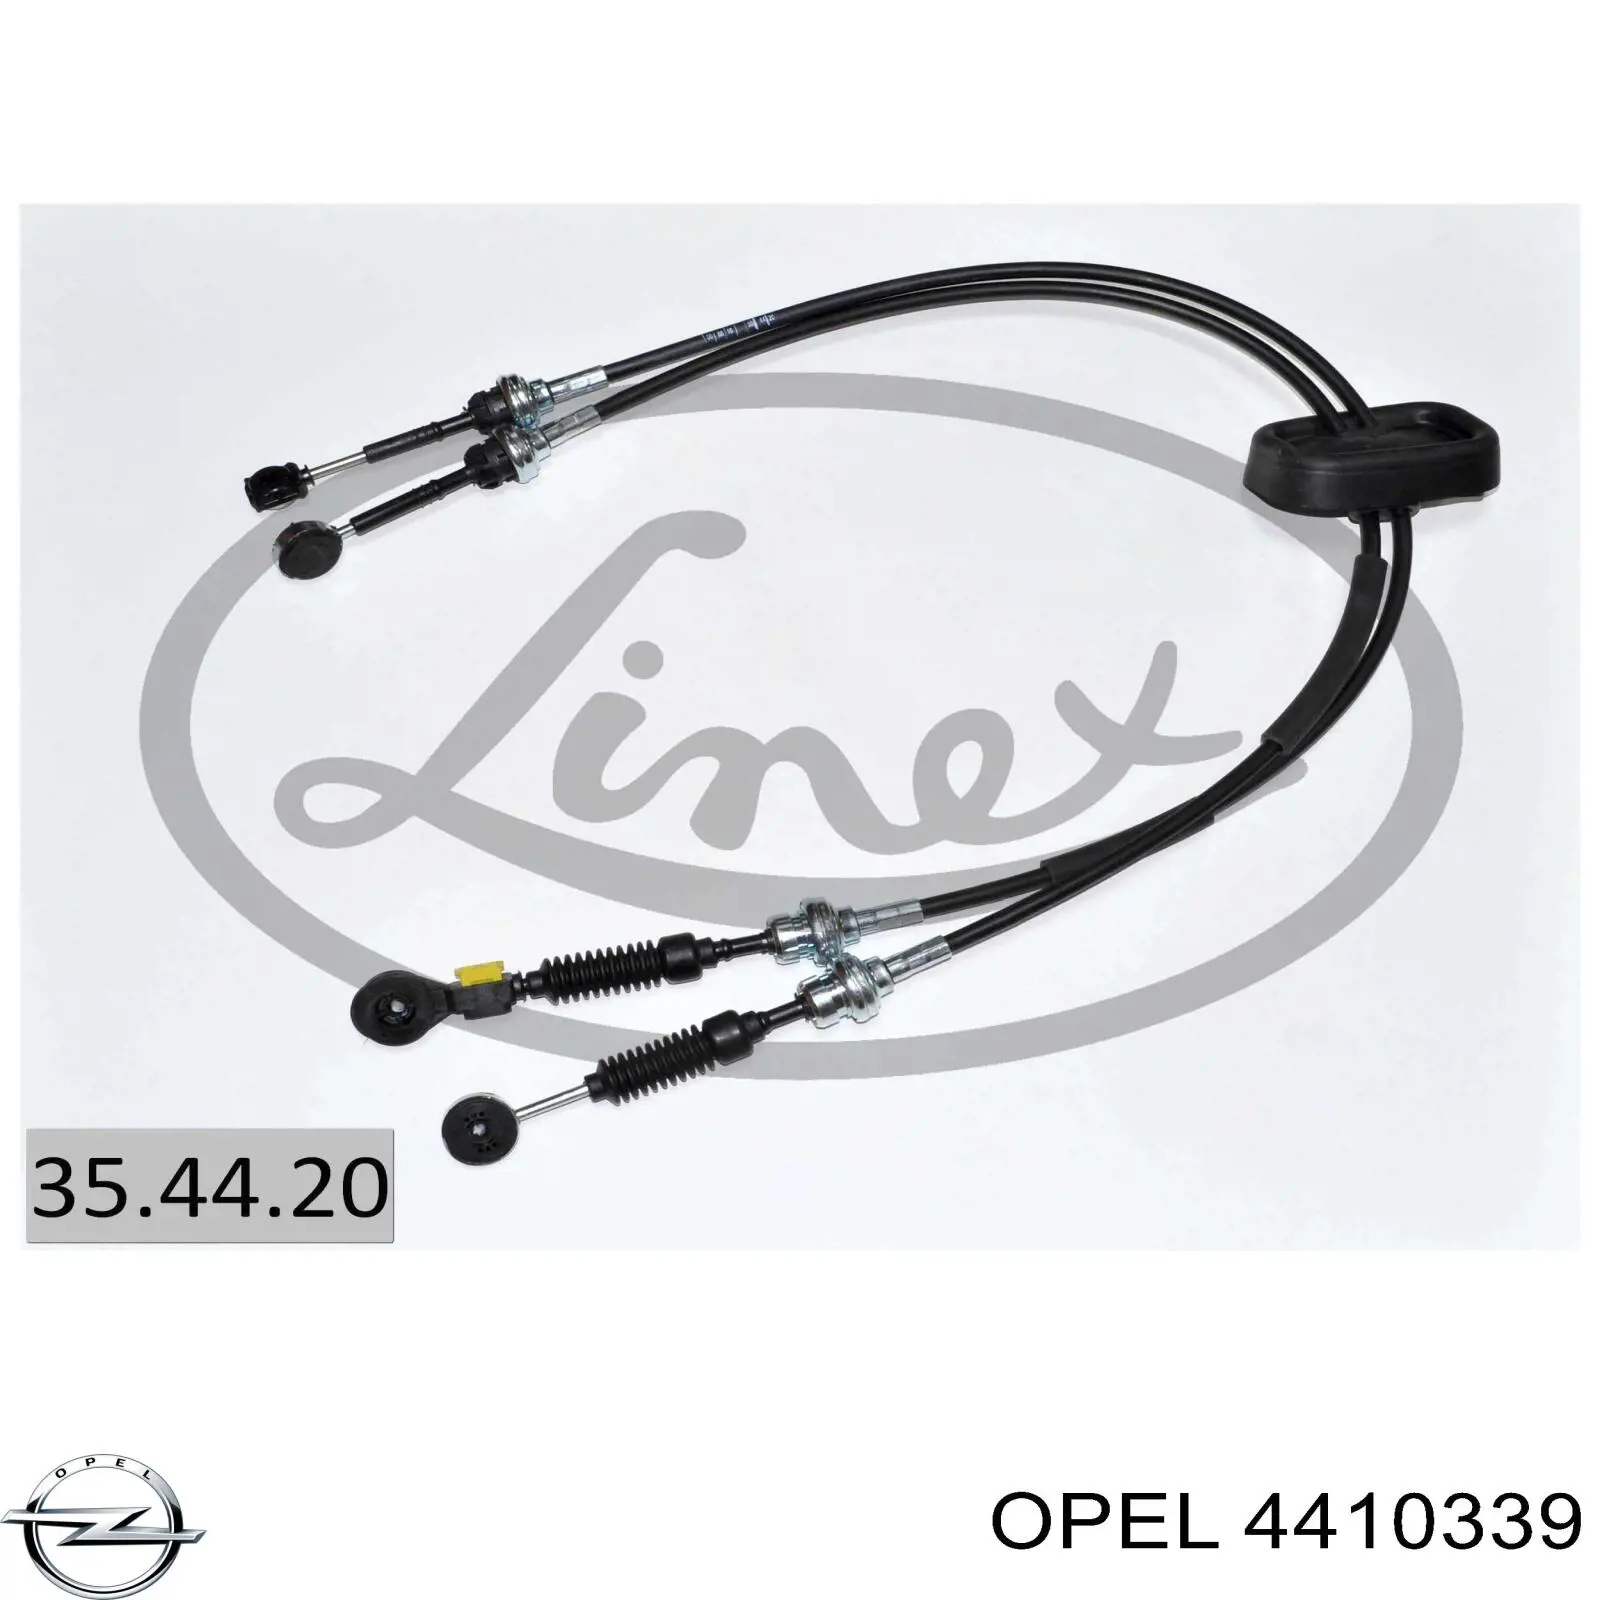 4410339 Opel cabo de mudança duplo